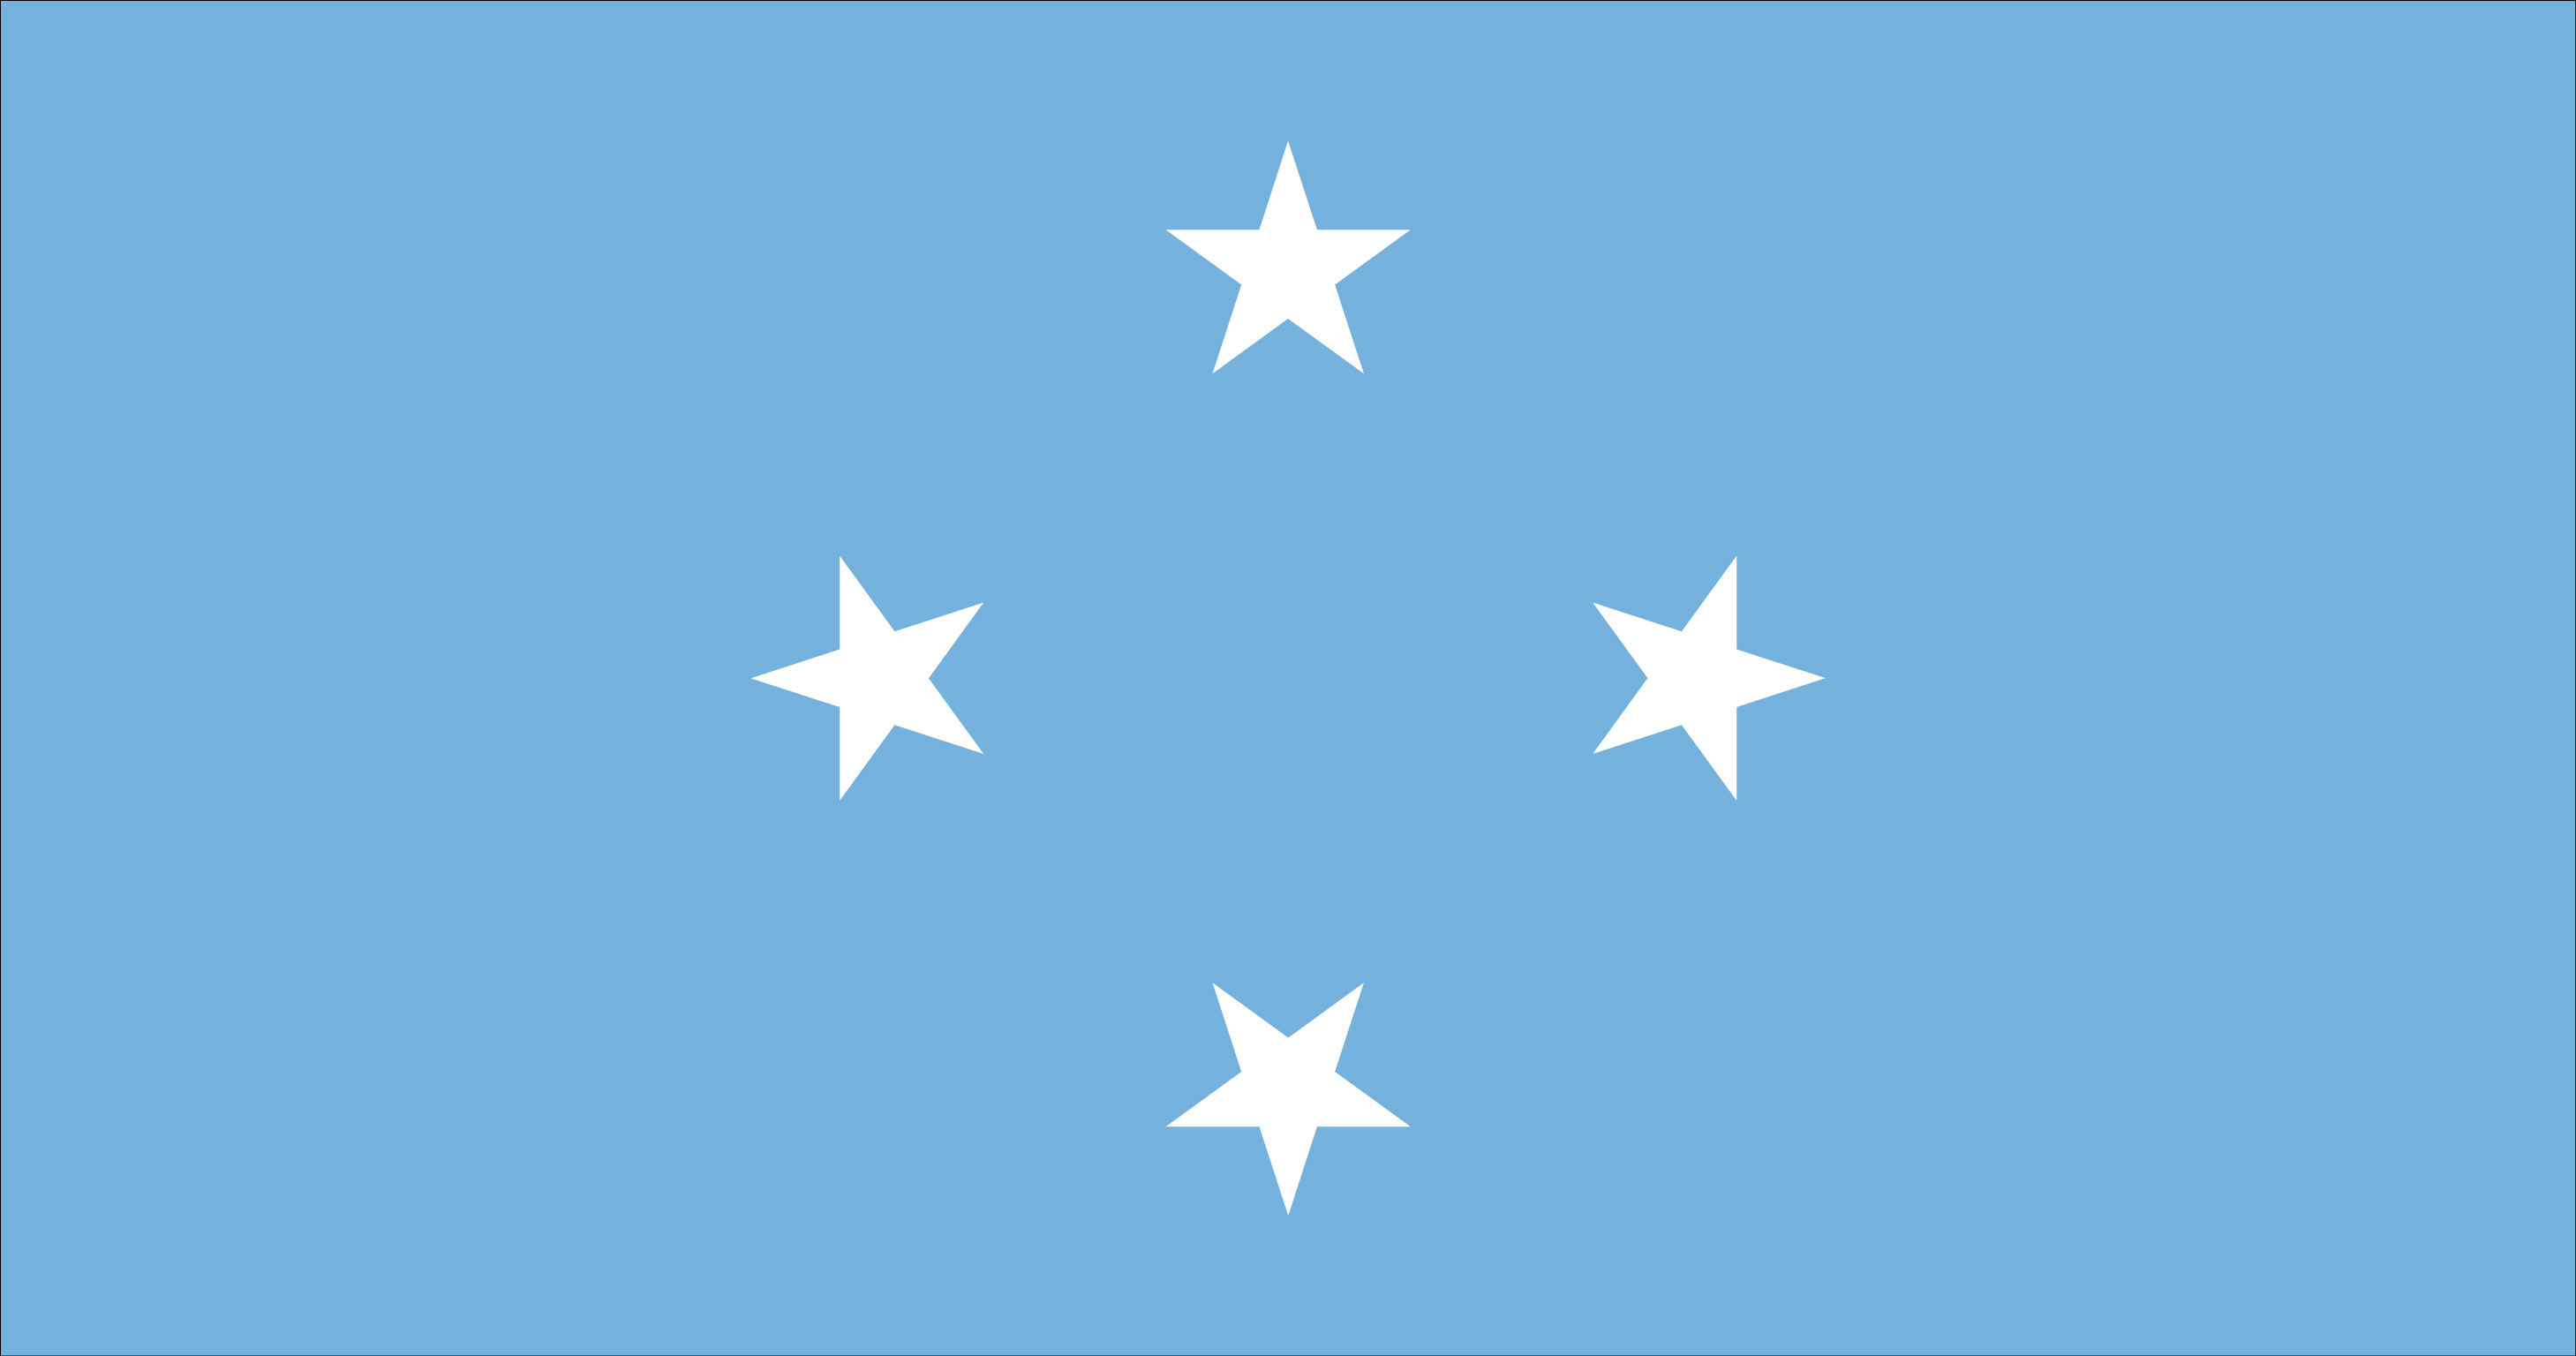 States of Micronesia